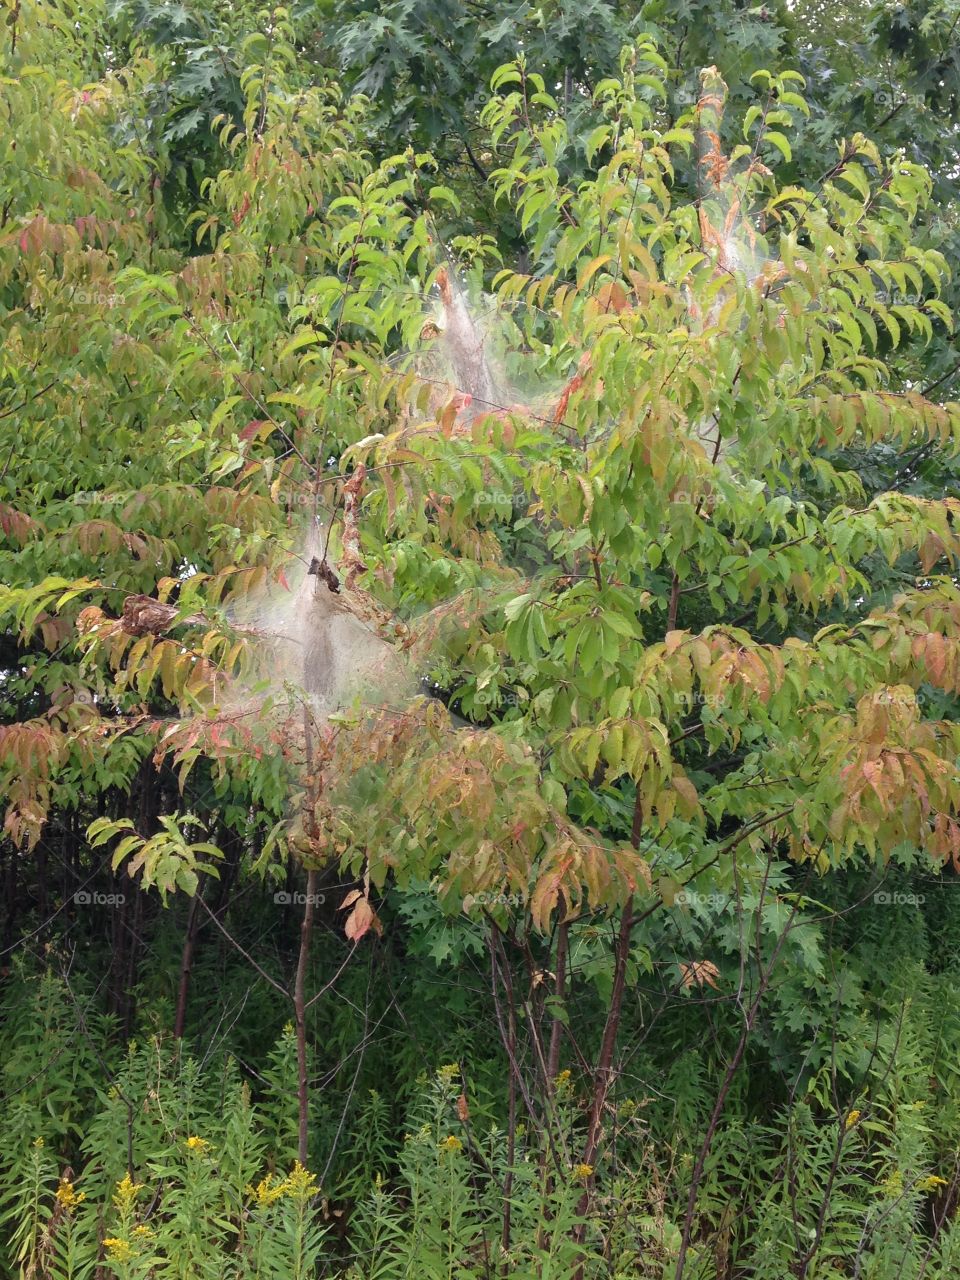 Spiderweb . Spiderweb in the trees 